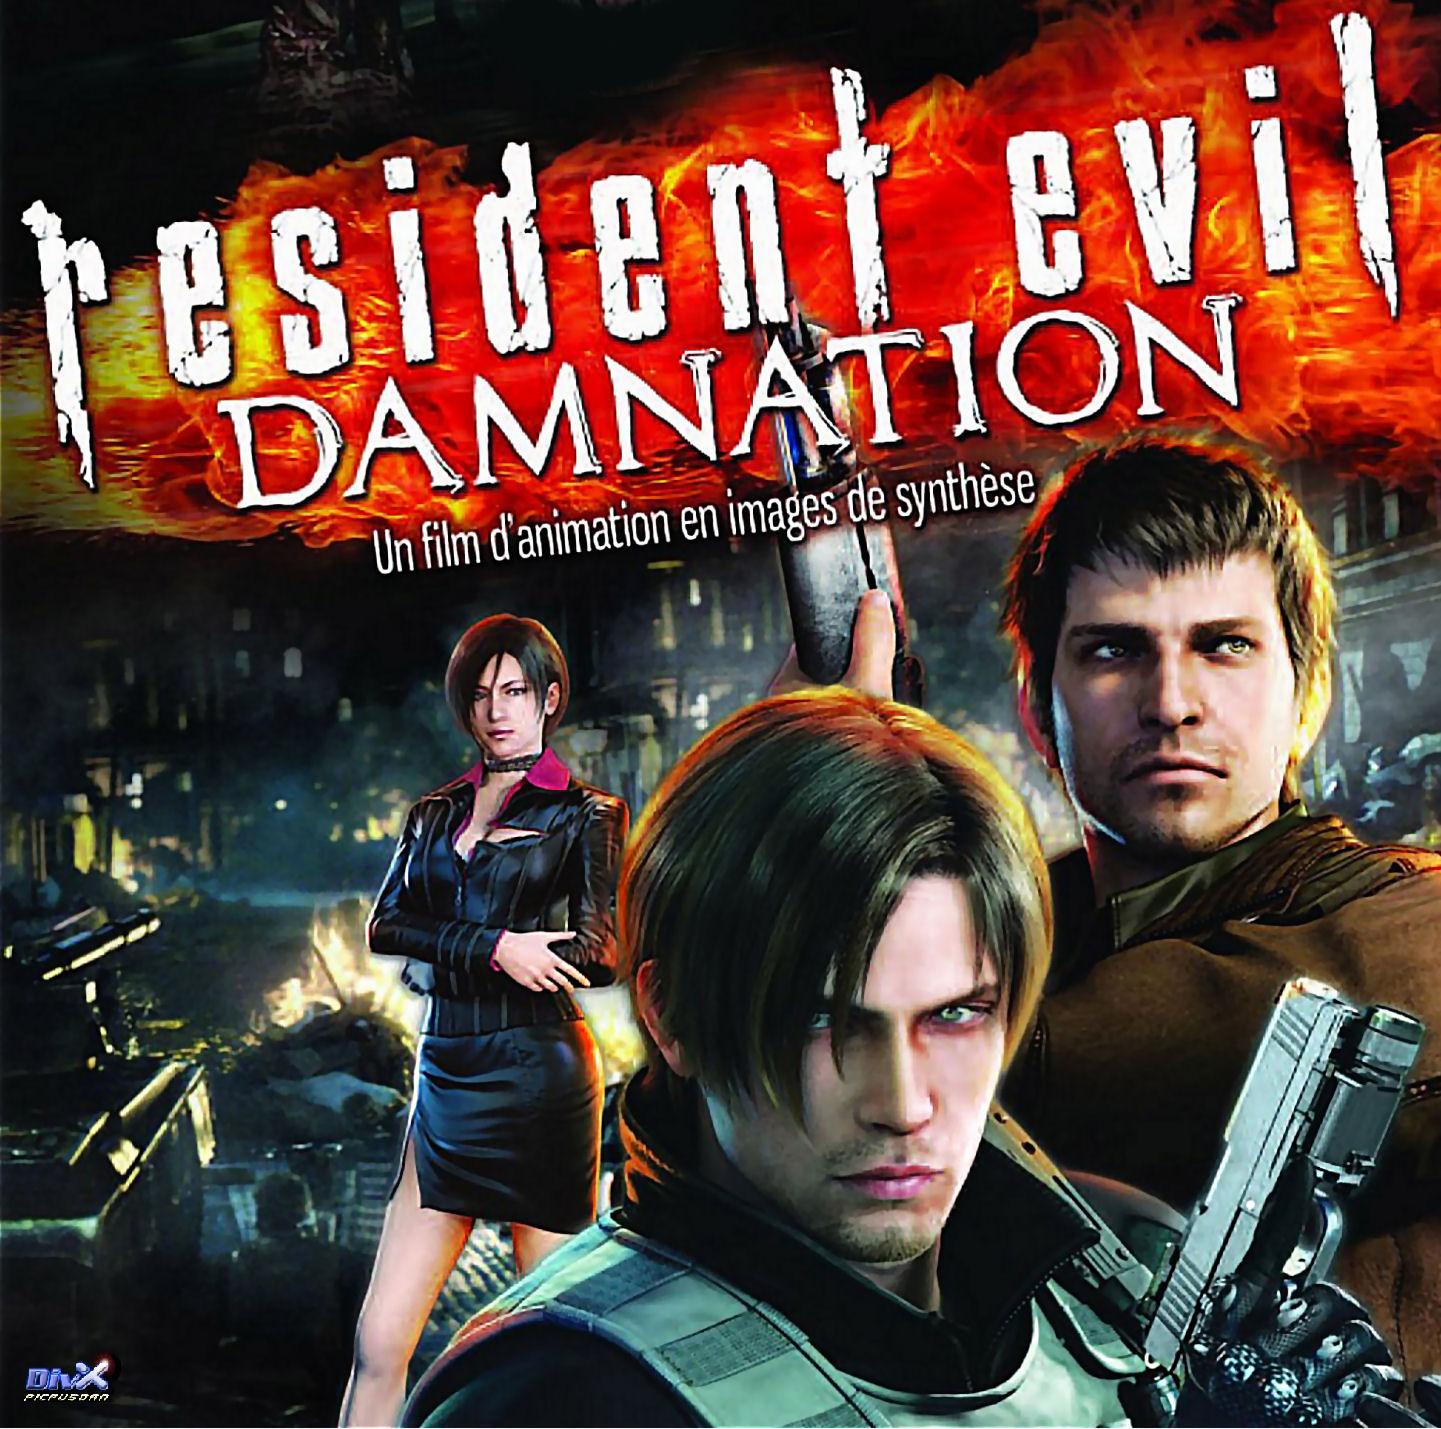 فلم انمي ريزدنت إيفل دامنيشن - Resident Evil Damnation مترجم عربي - stardim...